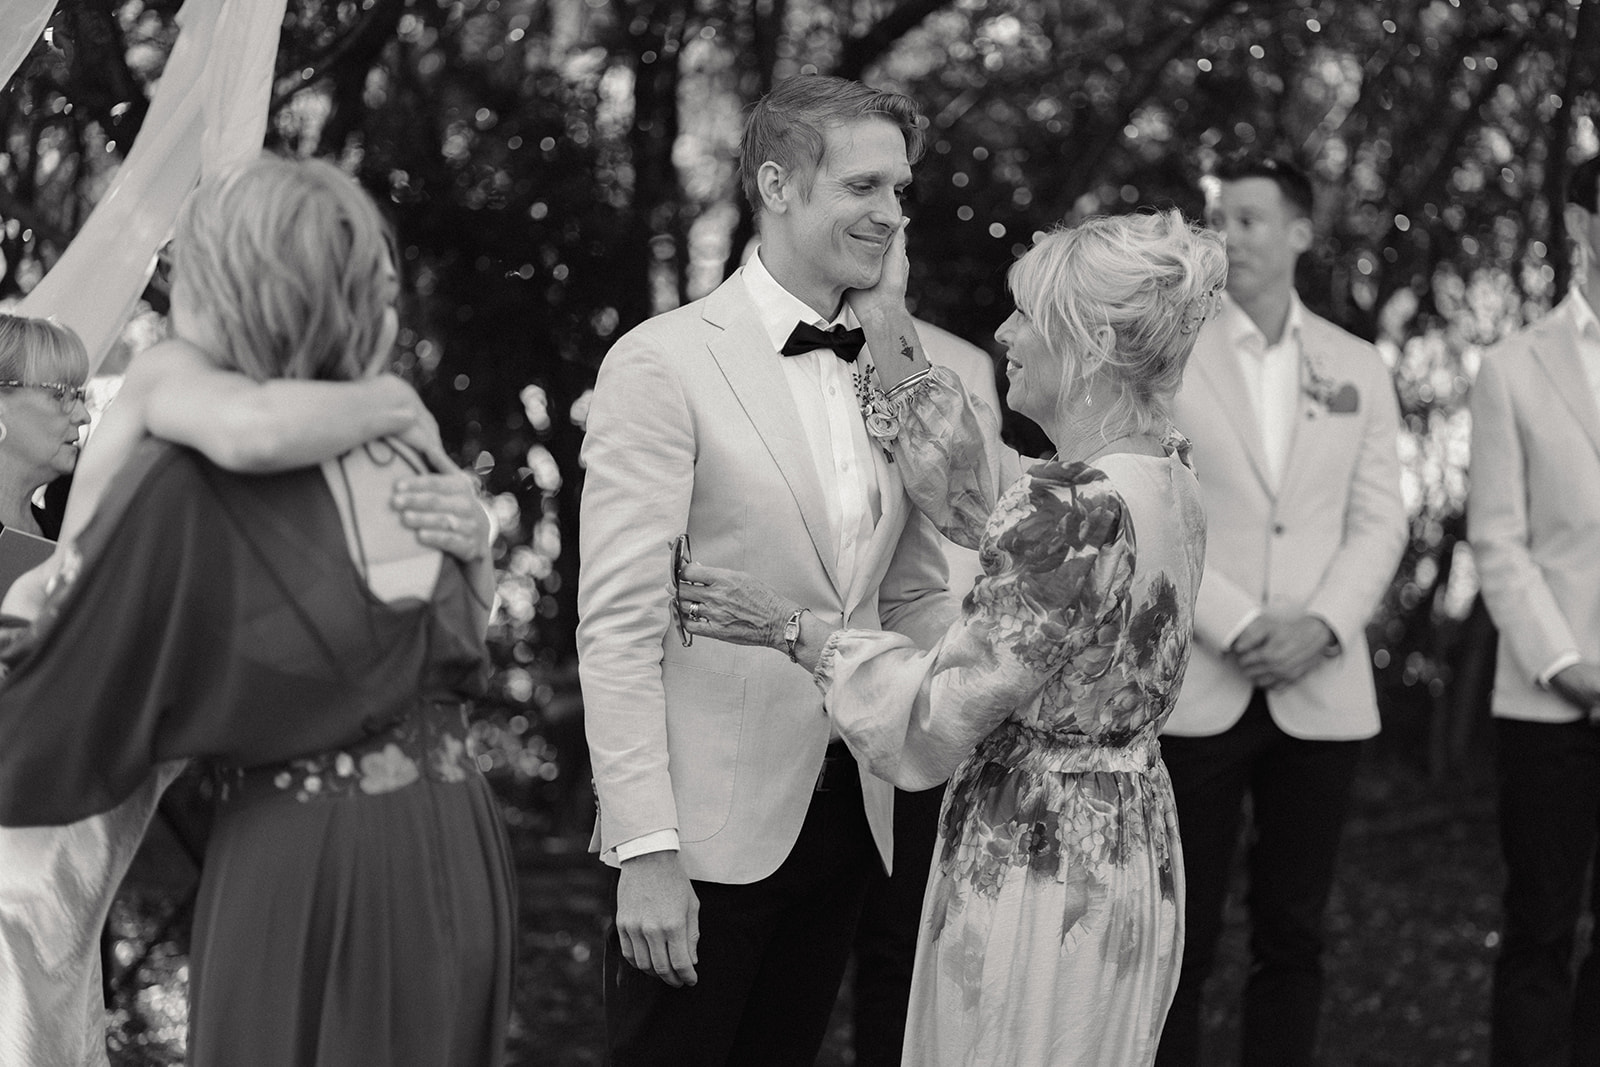 Brisbane editorial backyard wedding photography, candids of Ceremony